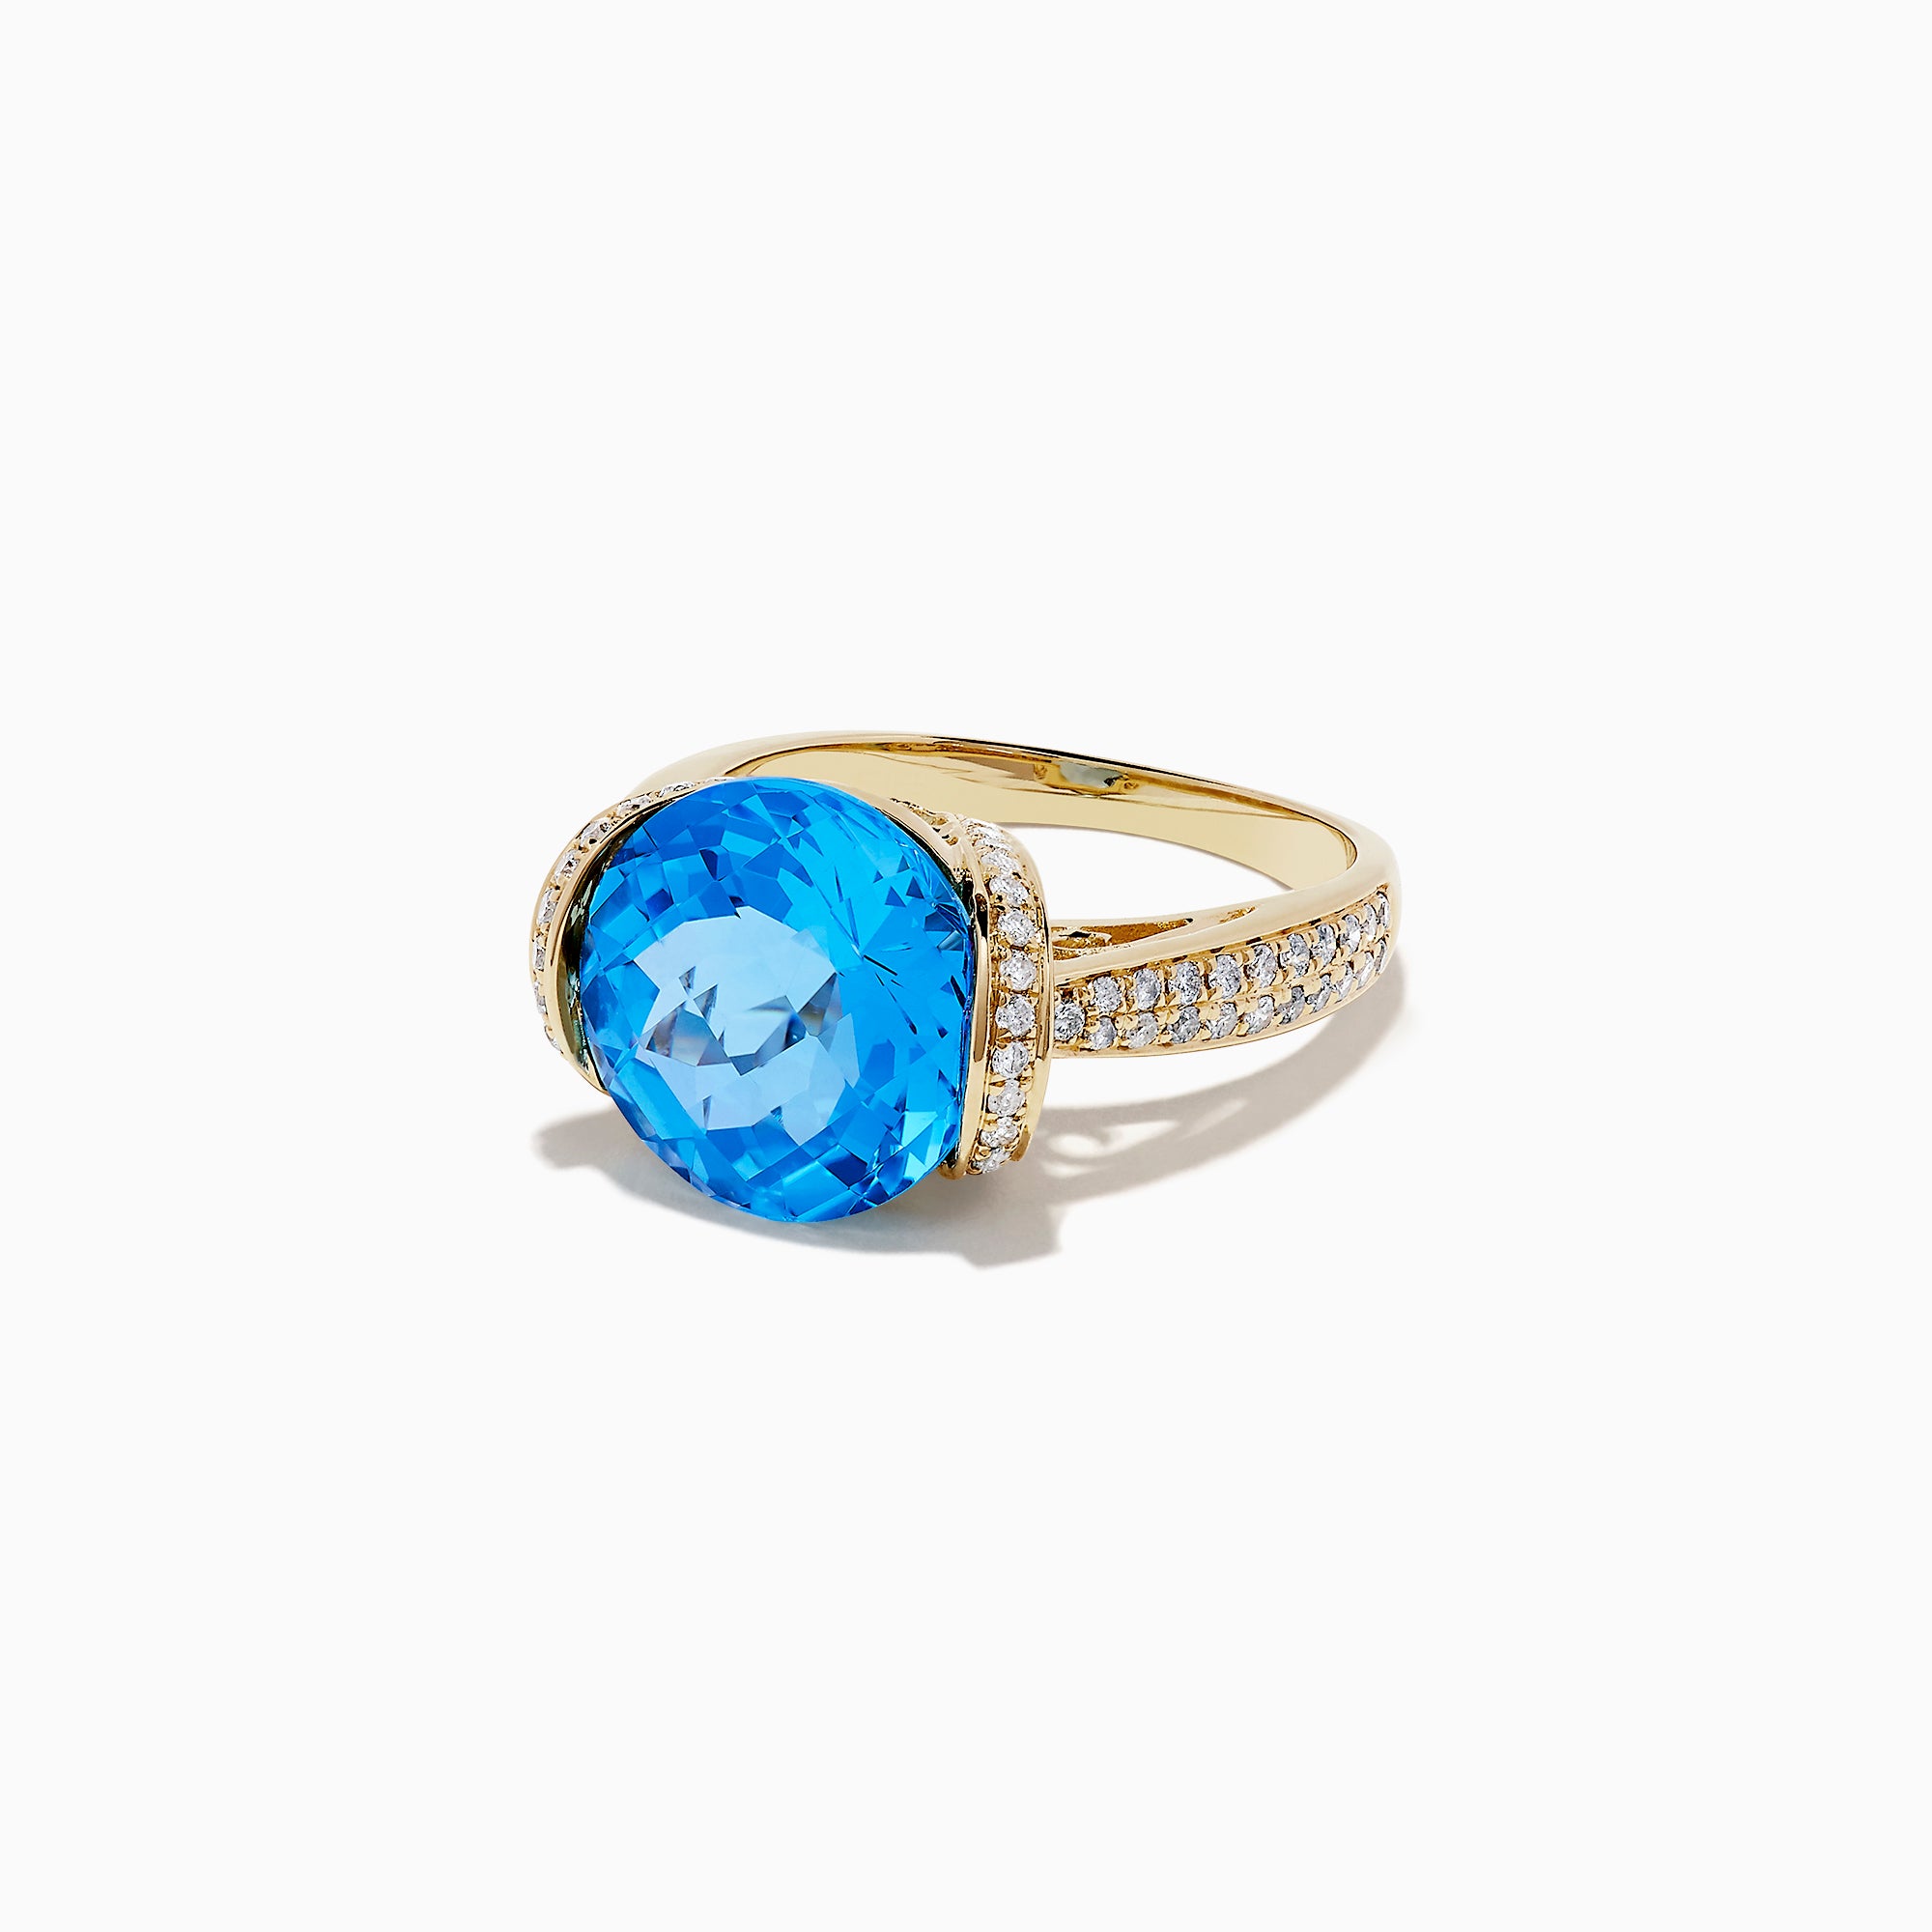 Effy Ocean Bleu 14K Yellow Gold Blue Topaz and Diamond Ring, 6.88 TCW